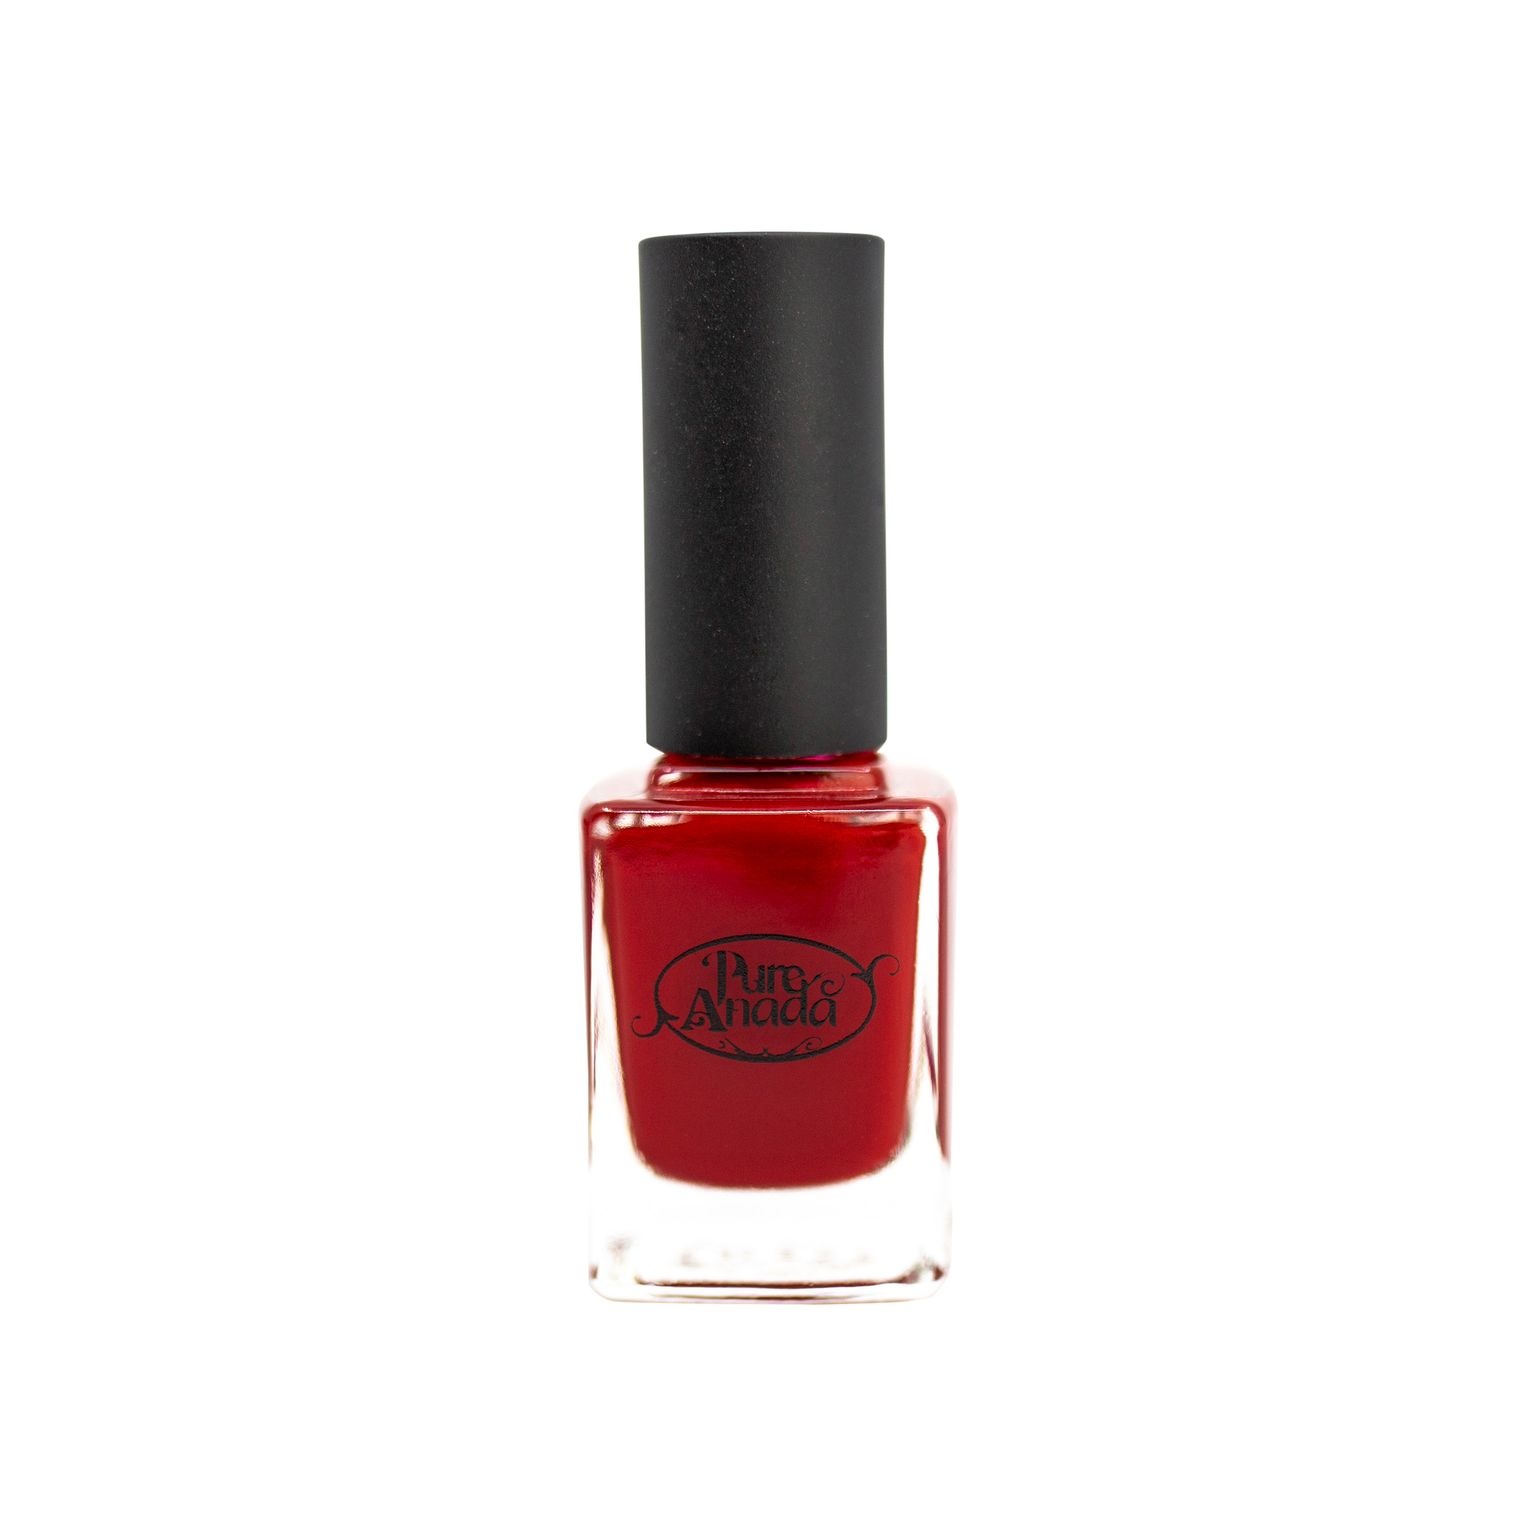 Ravishing Red Nail Polish - Pure Anada Cosmetics